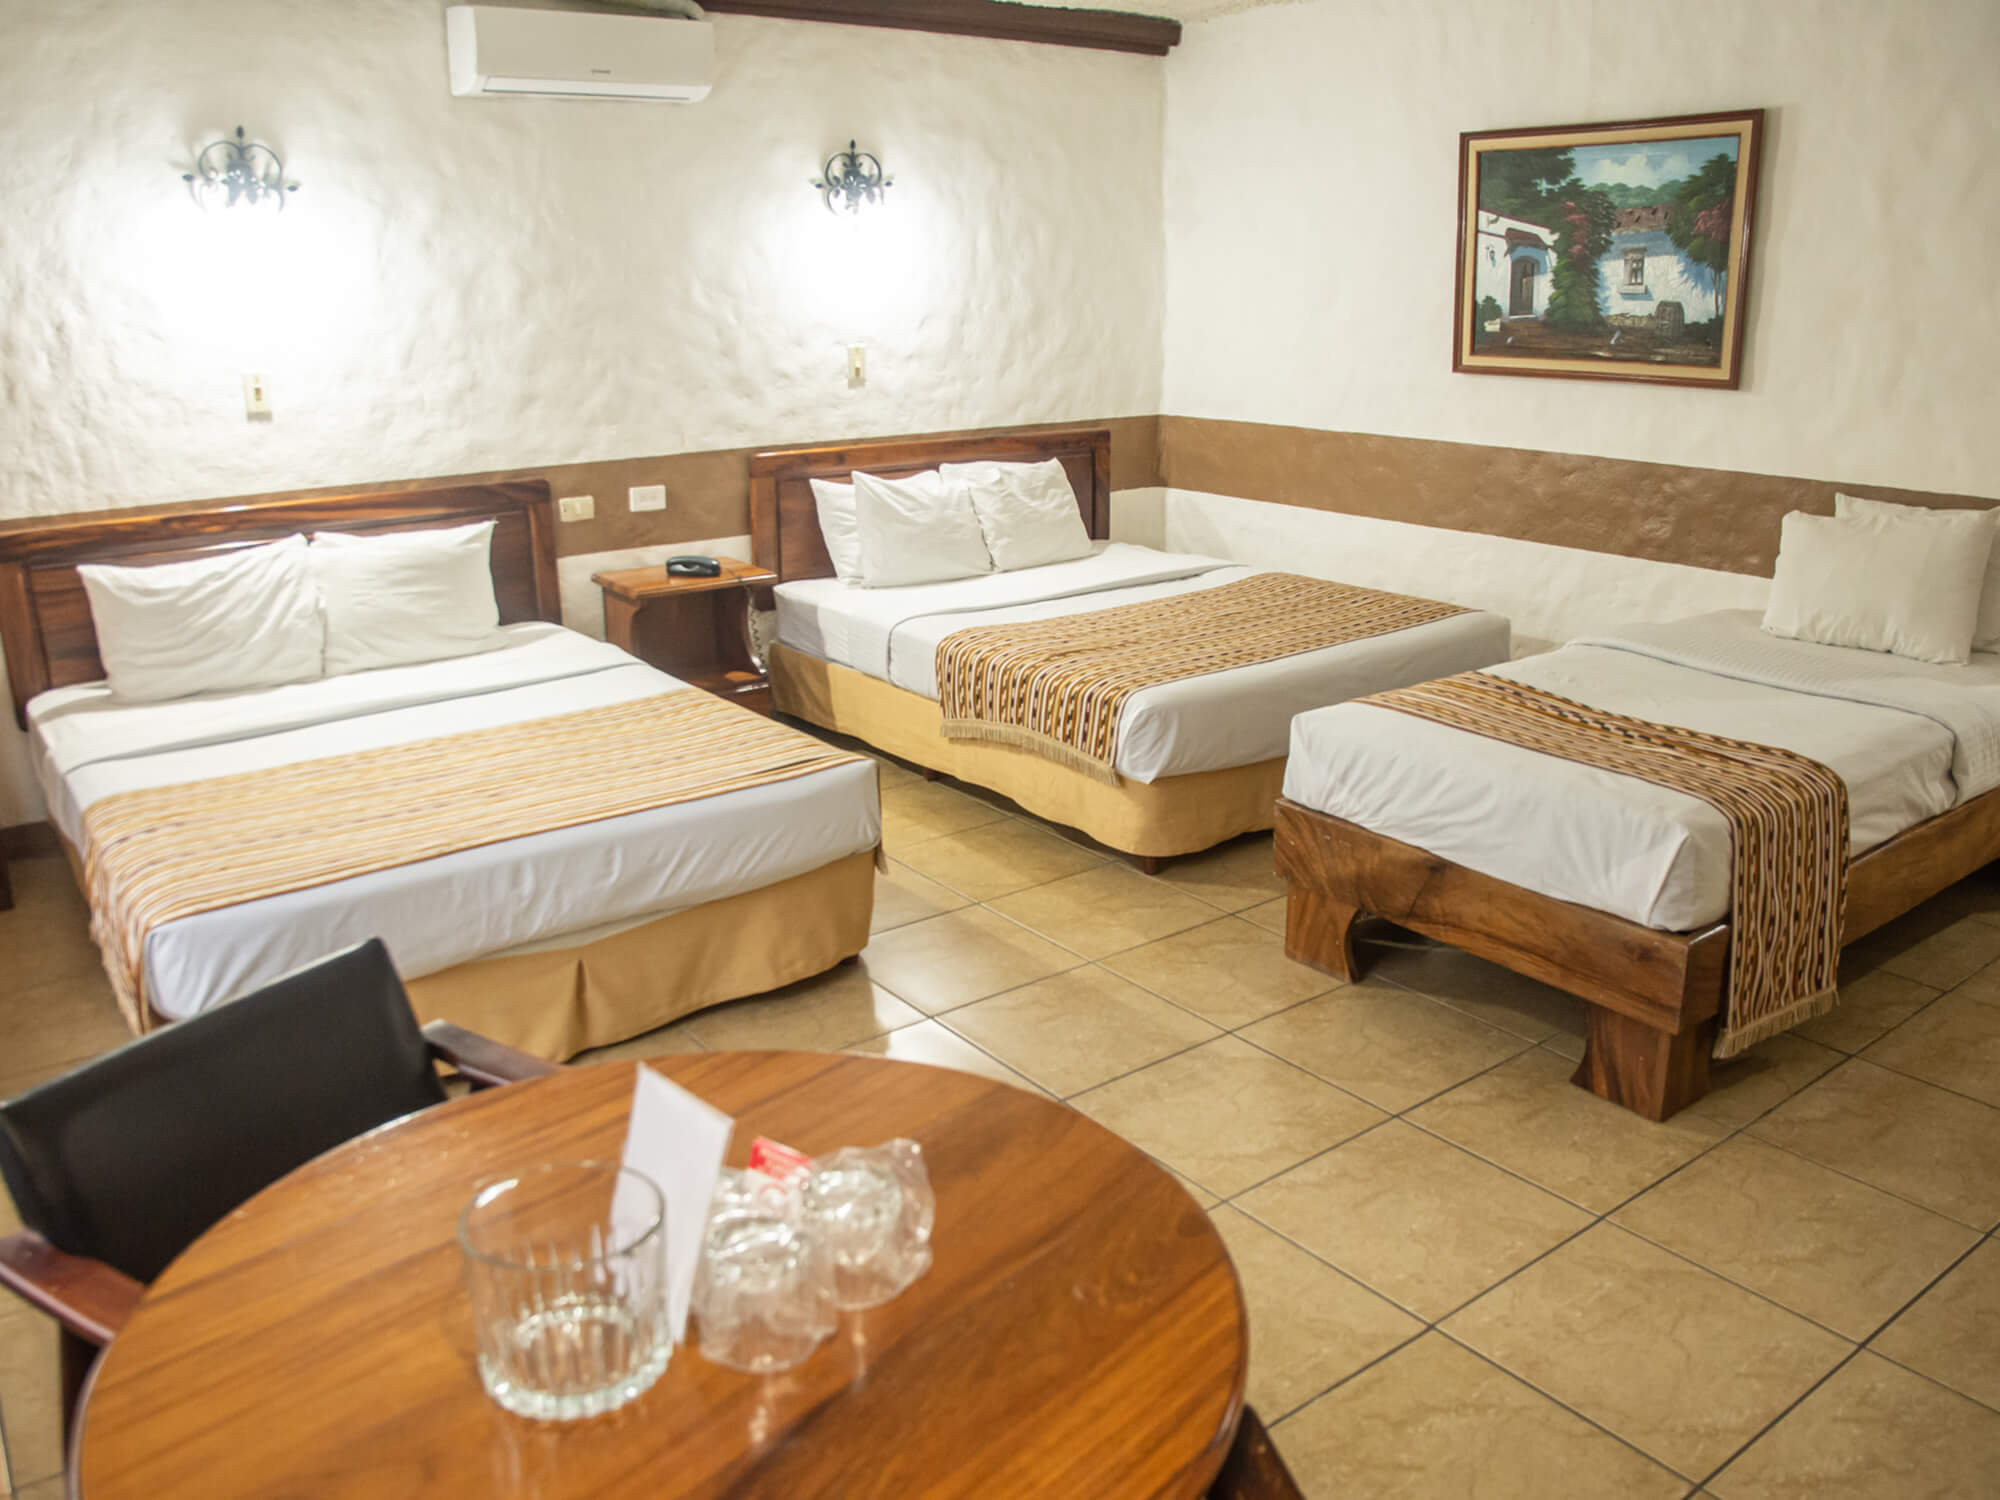 Rooms - Airport Hotel Costa Rica